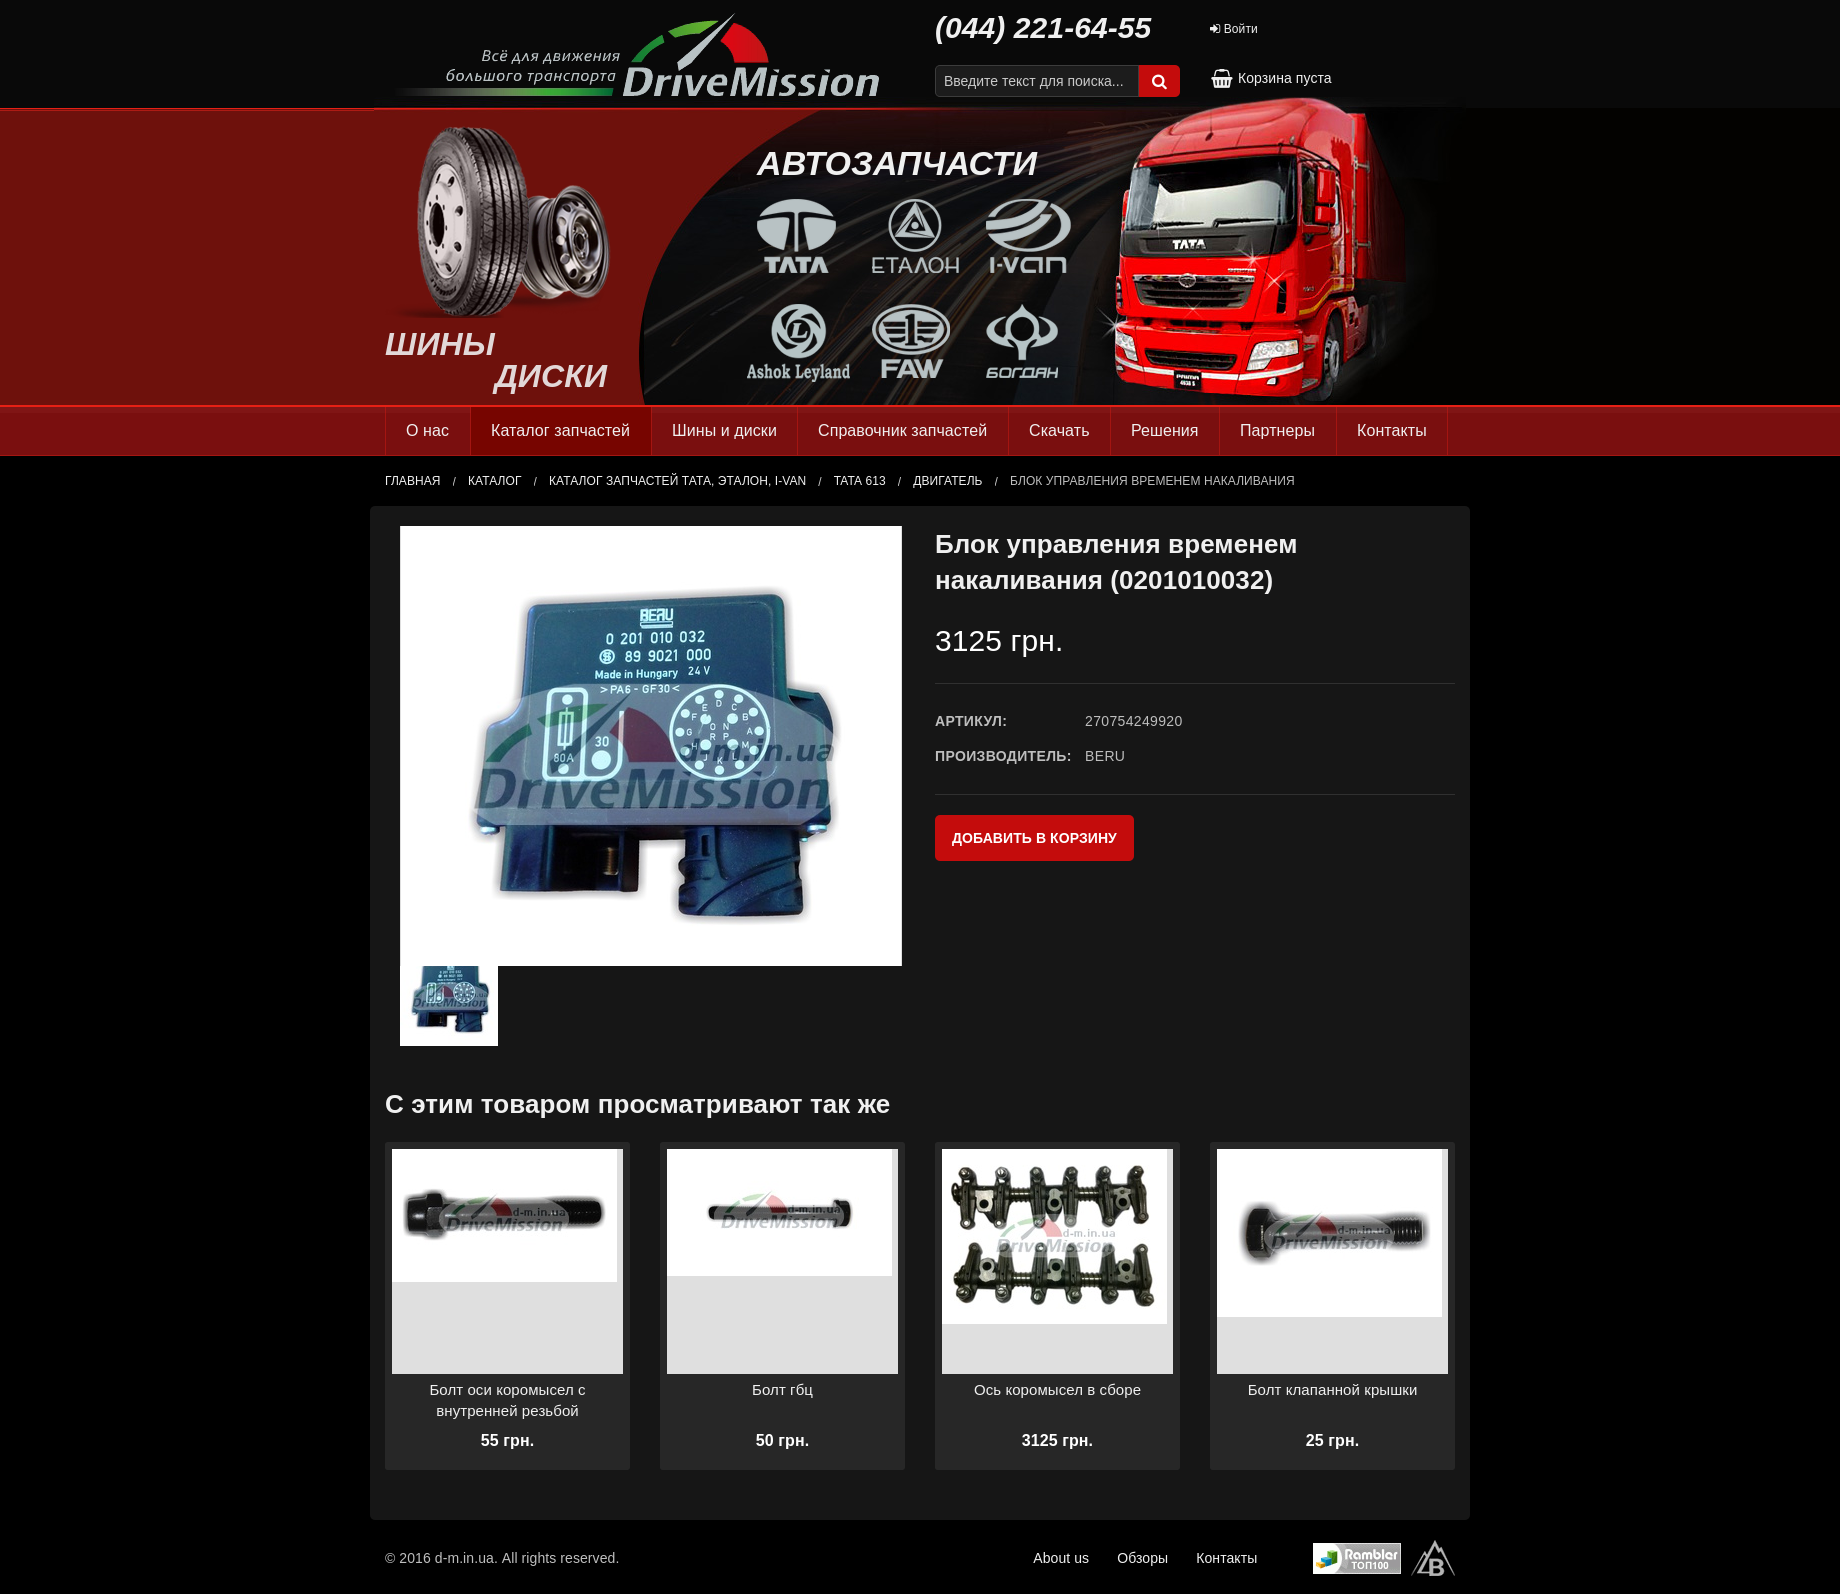 Car parts eCommerse website